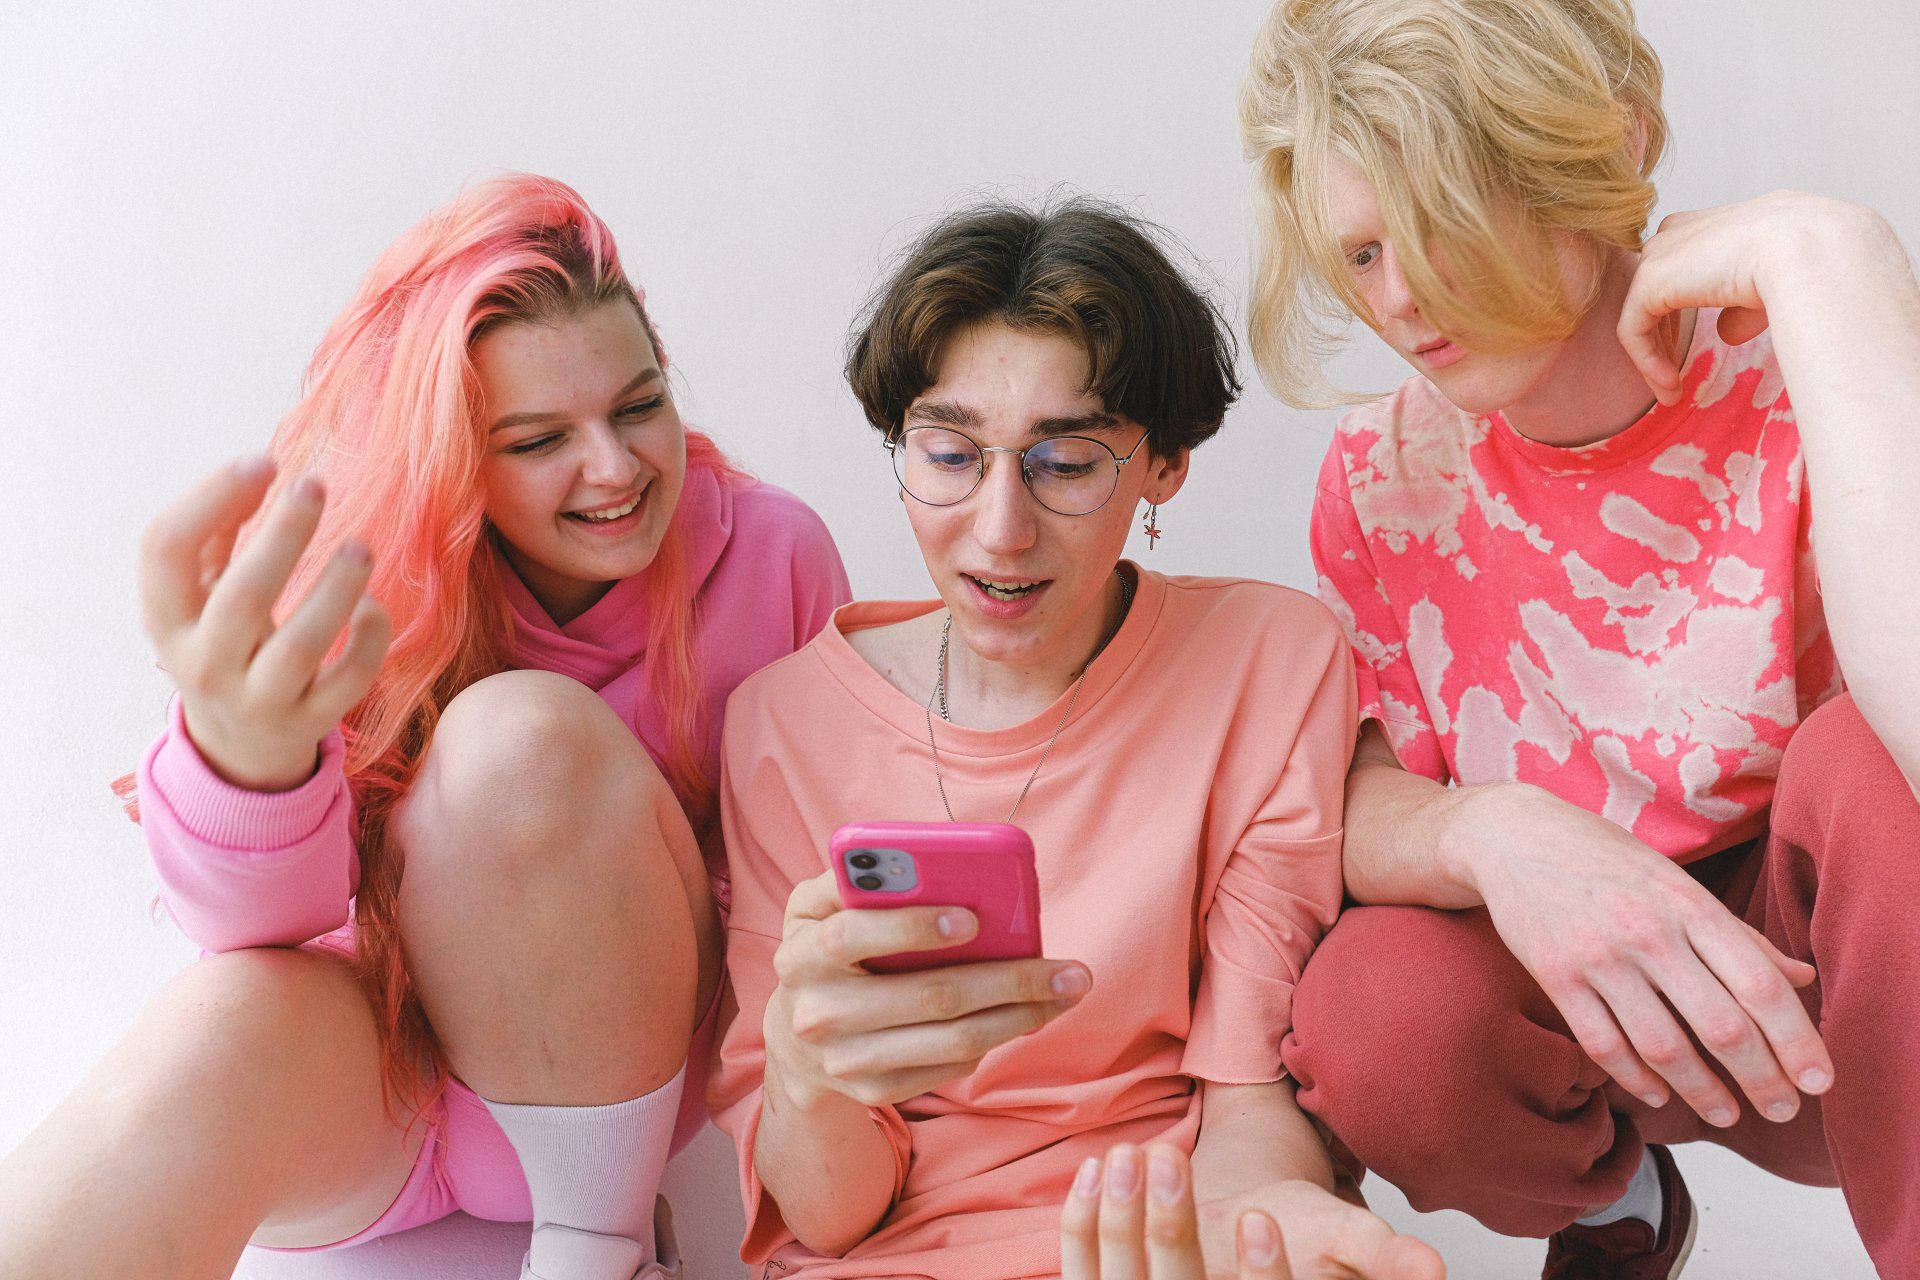 Children & Teens internet usage and habits